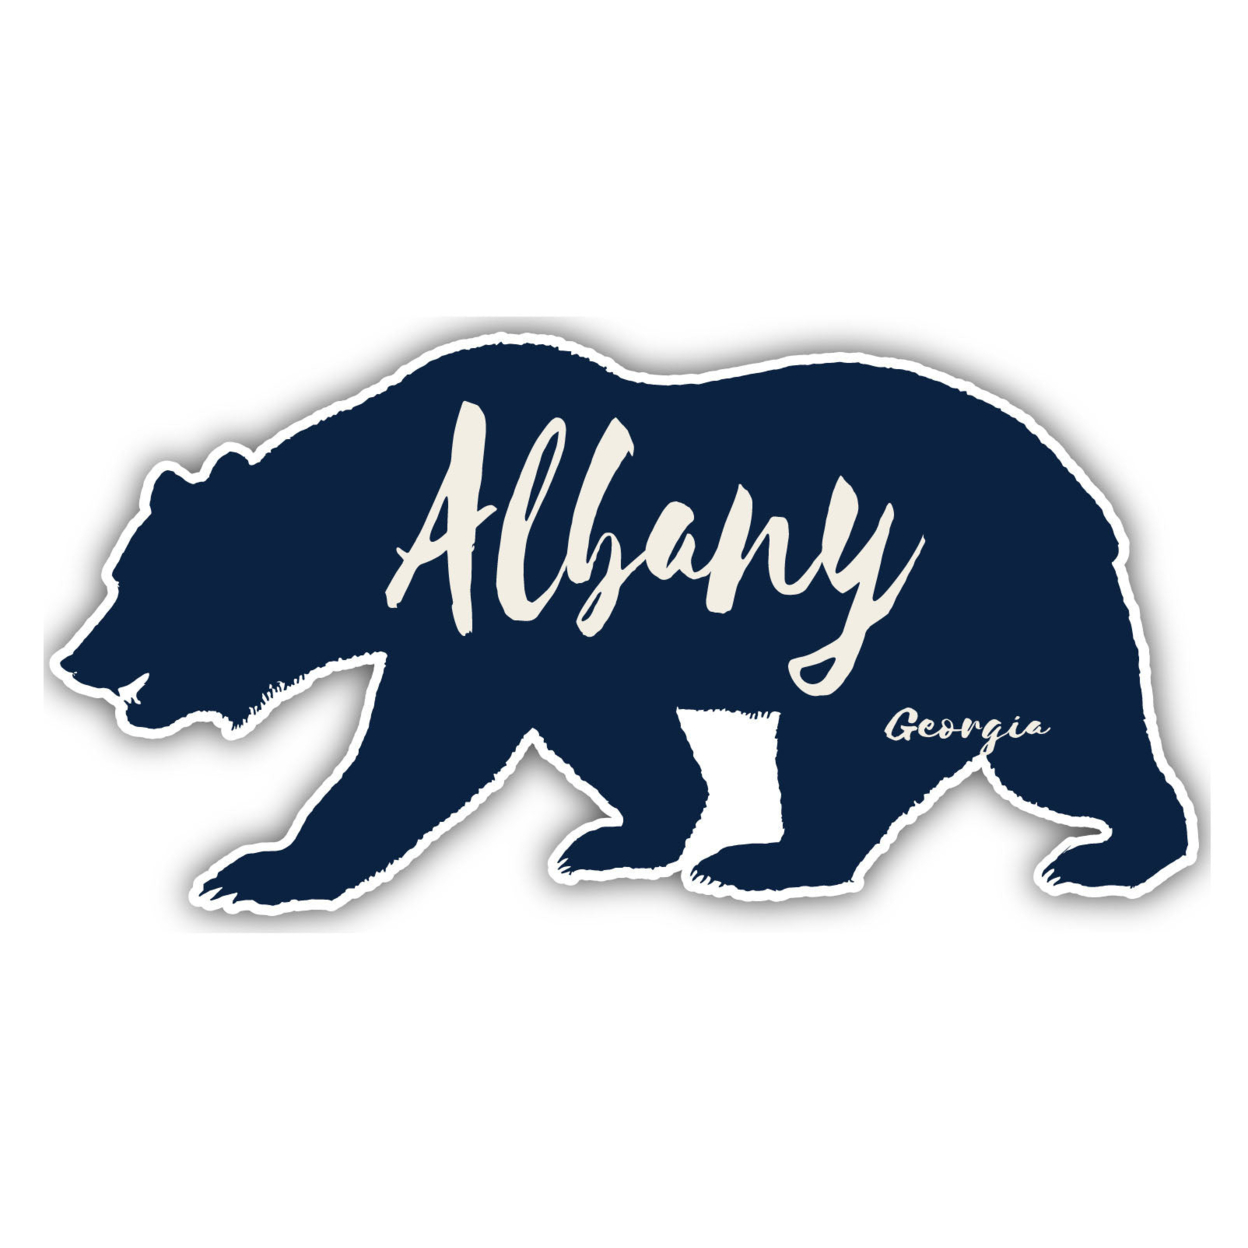 Albany Georgia Souvenir Decorative Stickers (Choose Theme And Size) - Single Unit, 2-Inch, Camp Life